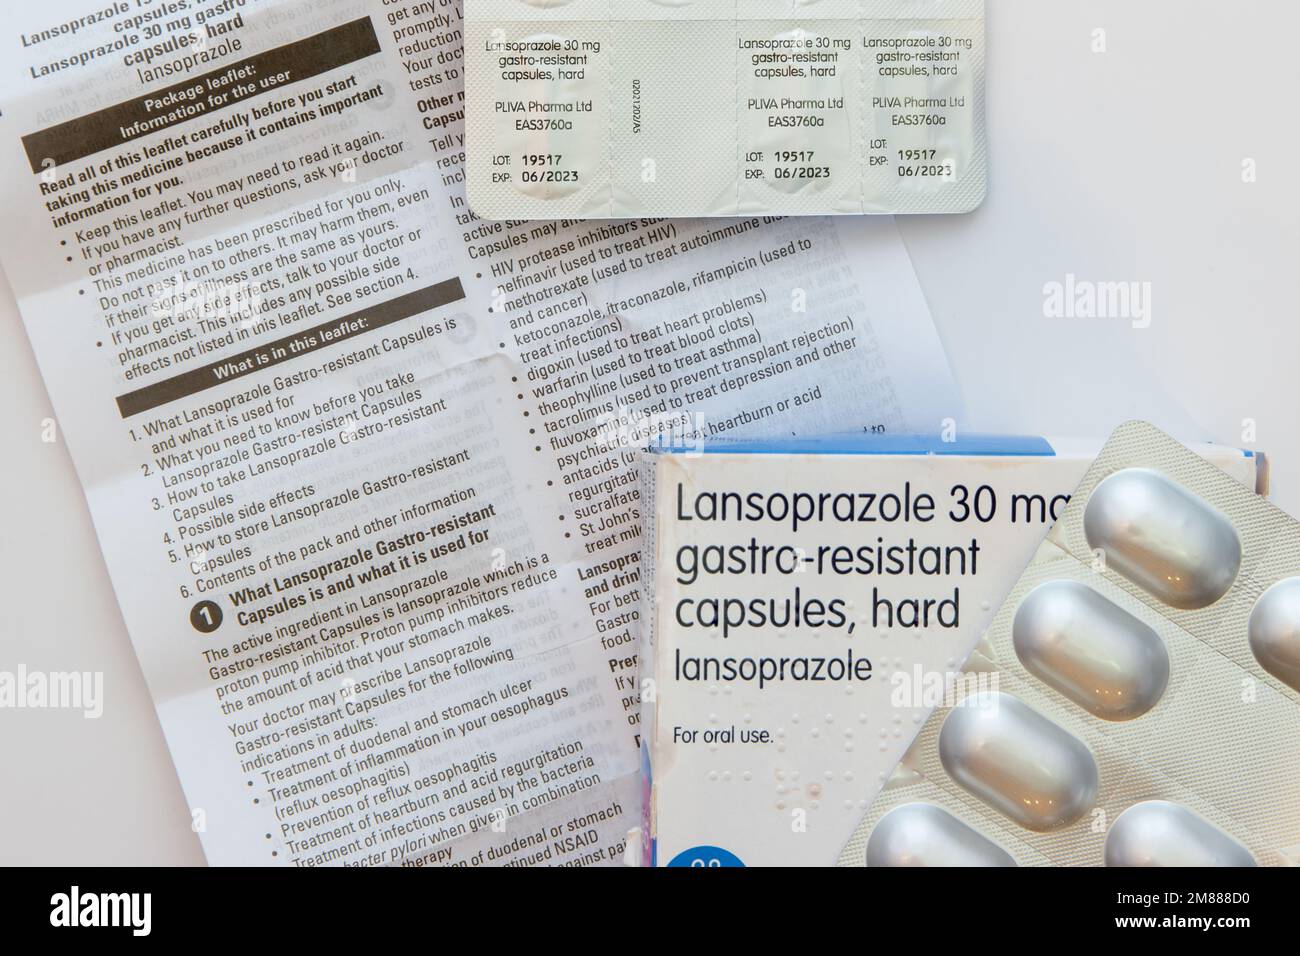 Box, information leaflet and blister pack of generic Pliva Teva 30mg Lansoprazole tablets / capsules Stock Photo